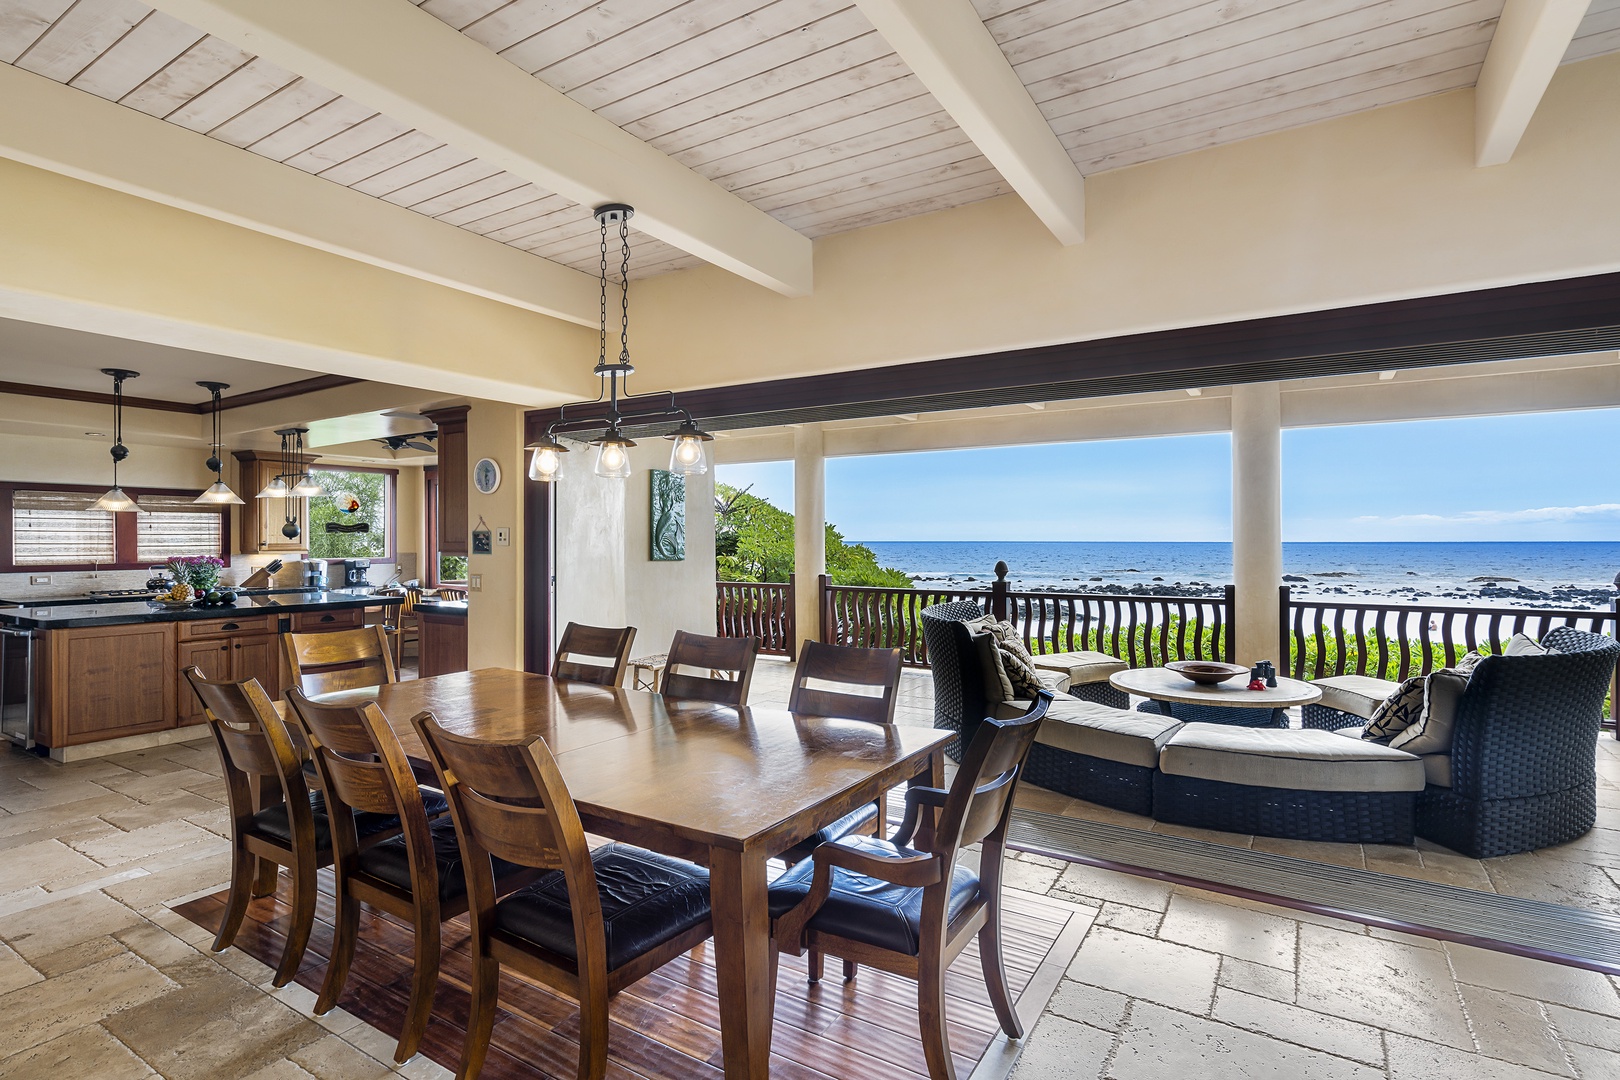 Kailua Kona Vacation Rentals, Mermaid Cove - Main level with expansive ocean views!